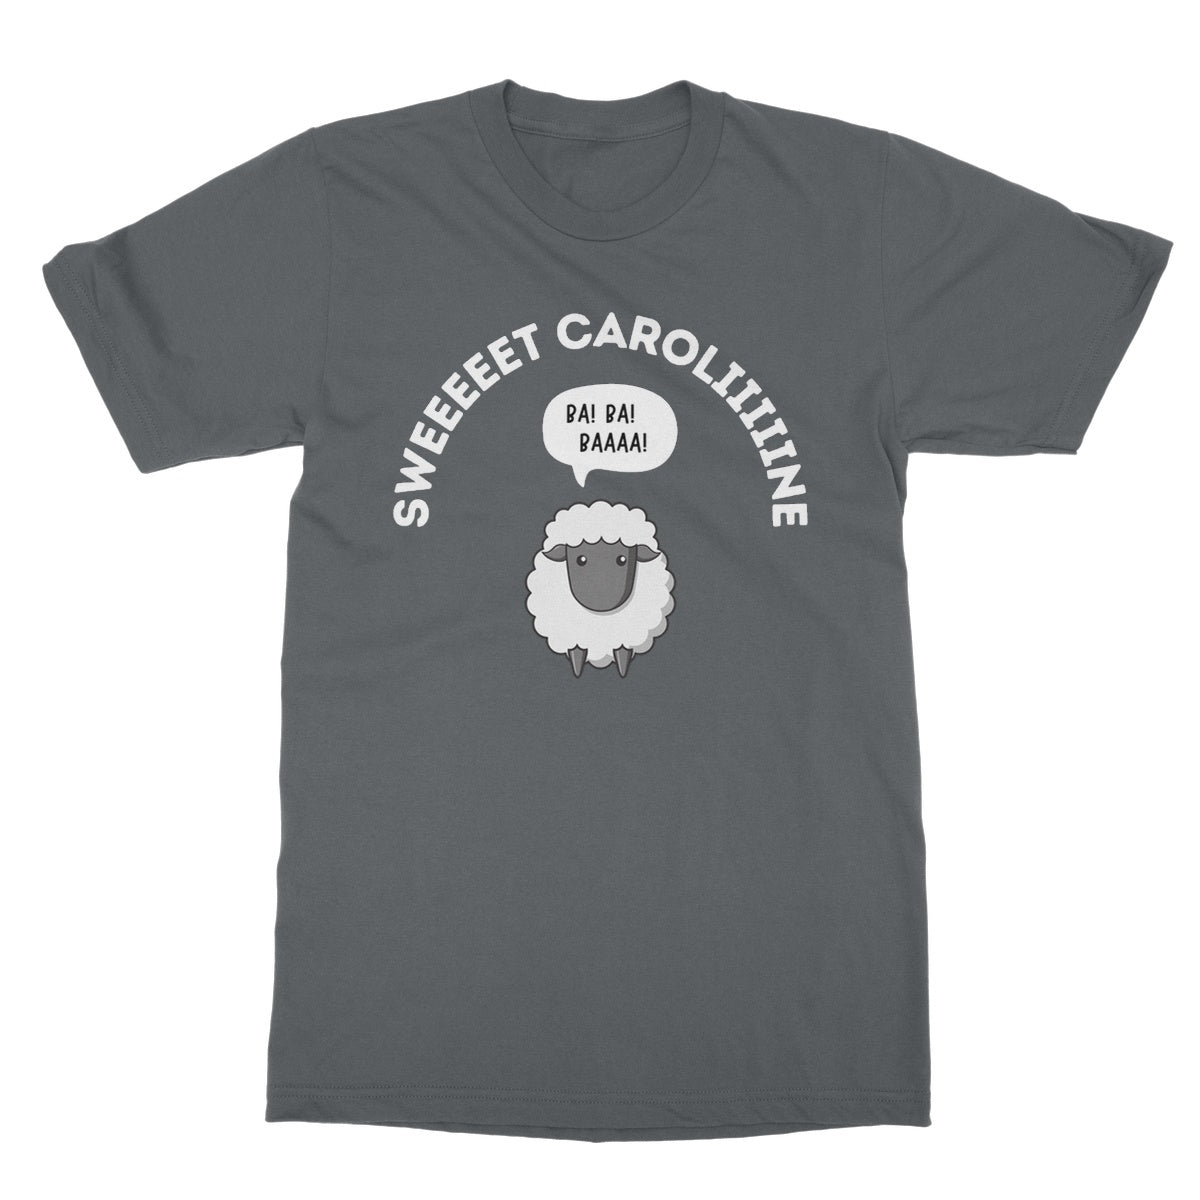 sweet caroline t shirt grey